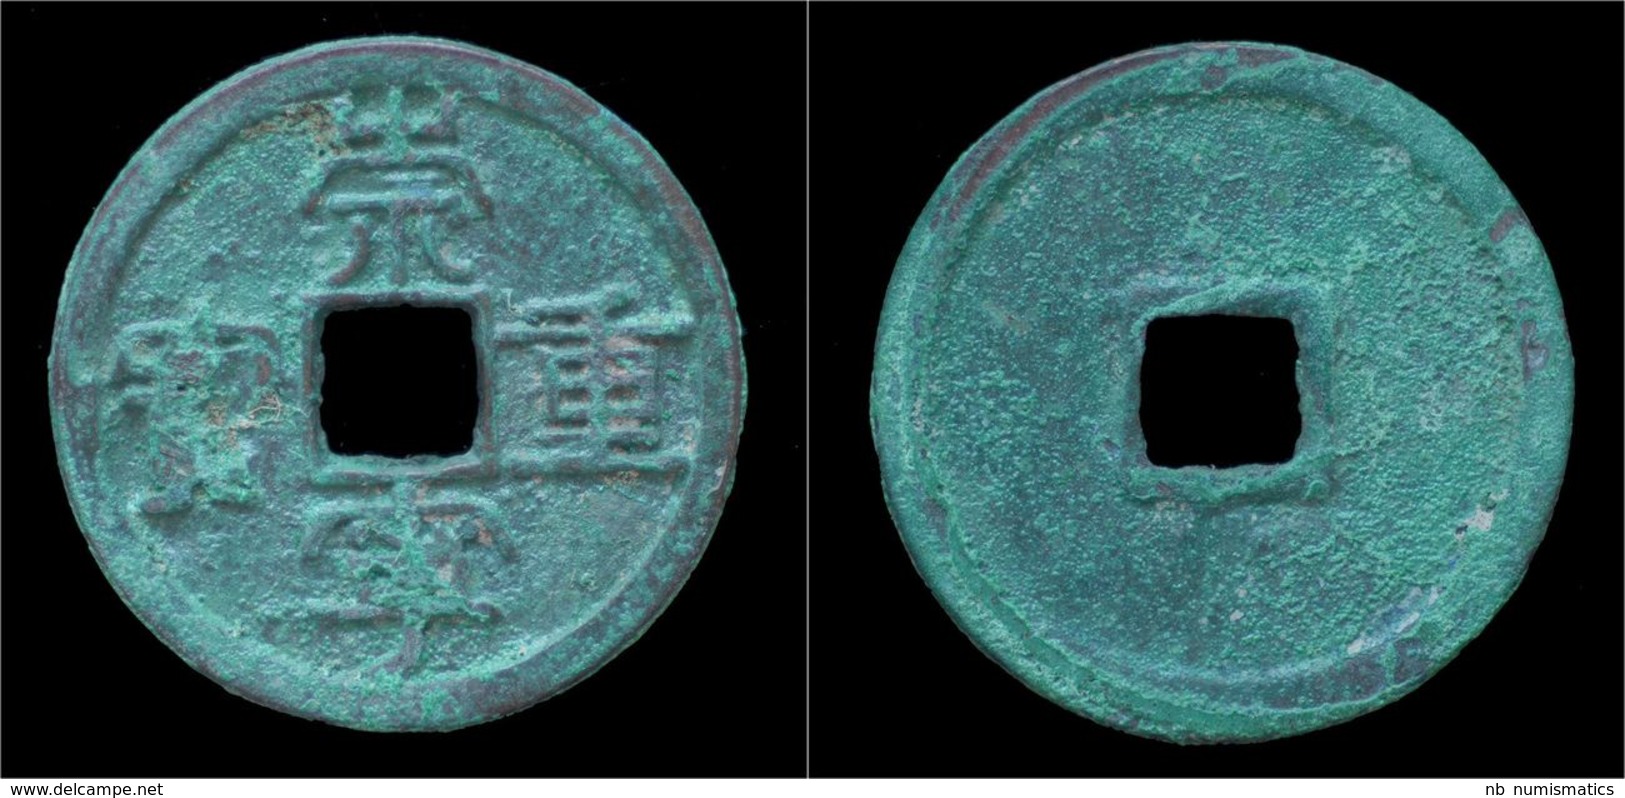 China Northern Song Dynasty Emperor Hui Zong Huge Bronze 10 Cash - Cina